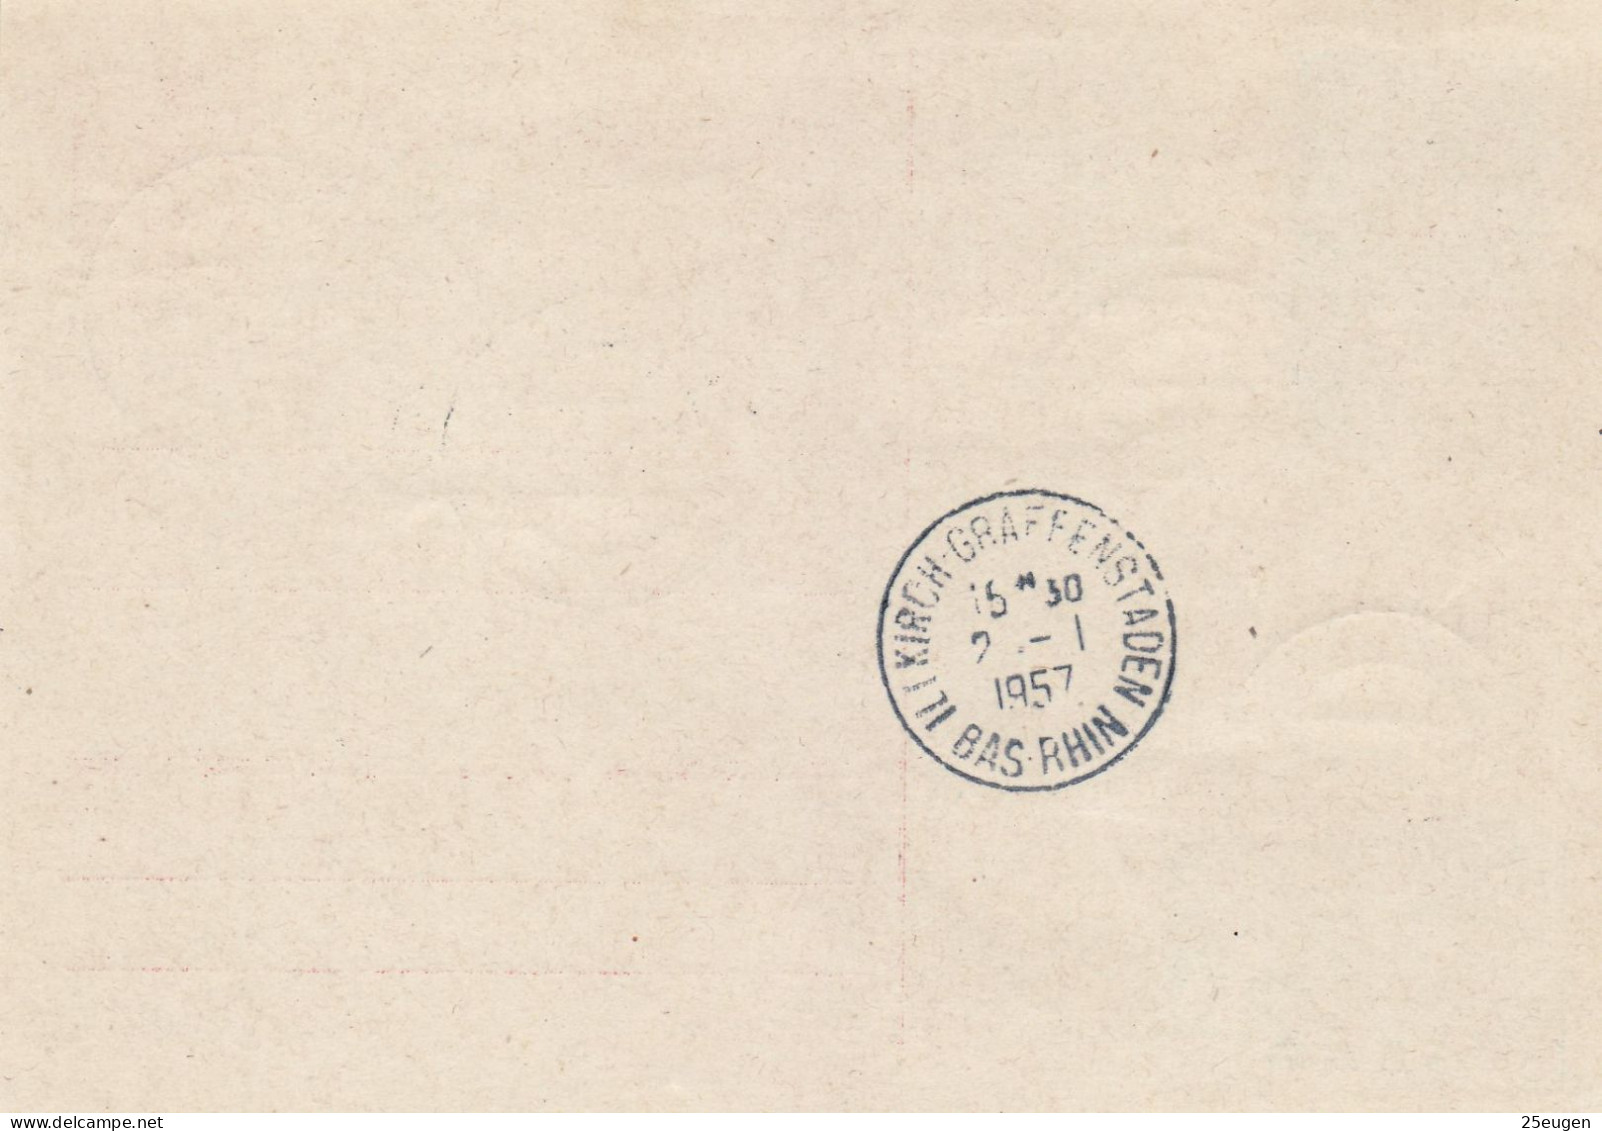 SAAR 1957 POSTCARD MiNr P 36 A  SENT FROM SAARBRUECKEN  TO GRAFFENSTADEN - Lettres & Documents